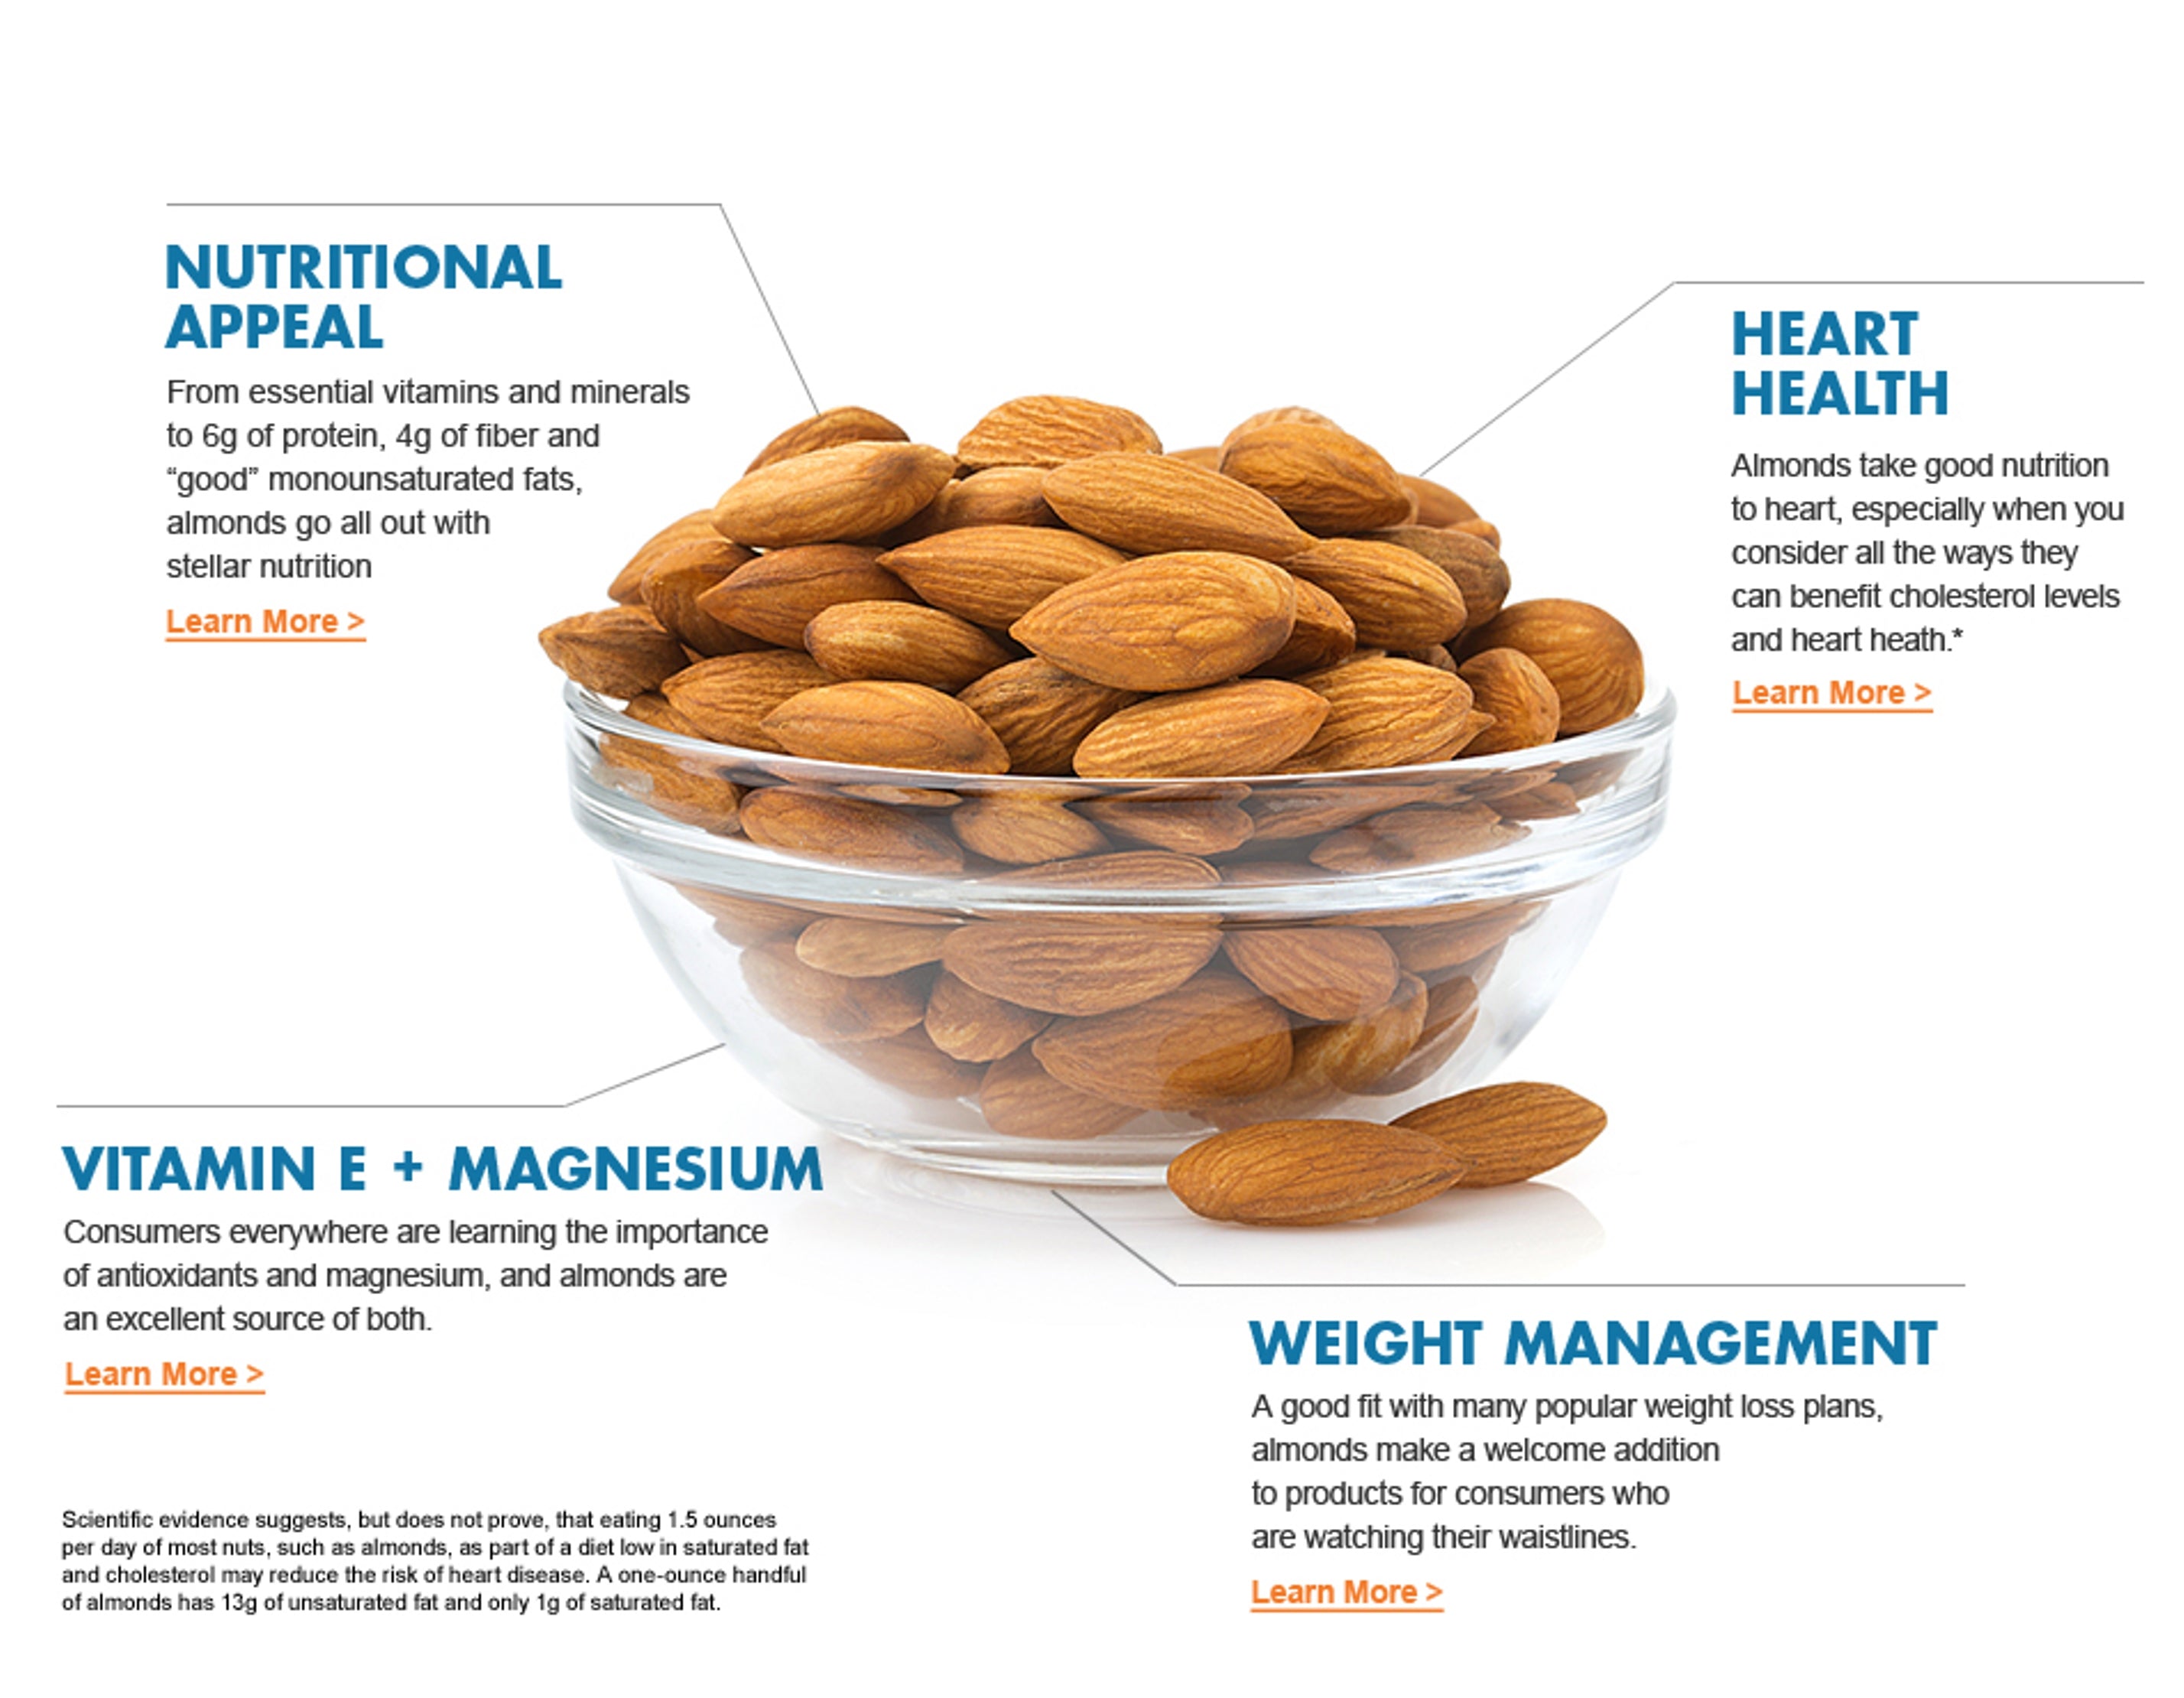 Chastity 100% Natural California Almonds (Badam) 100gm